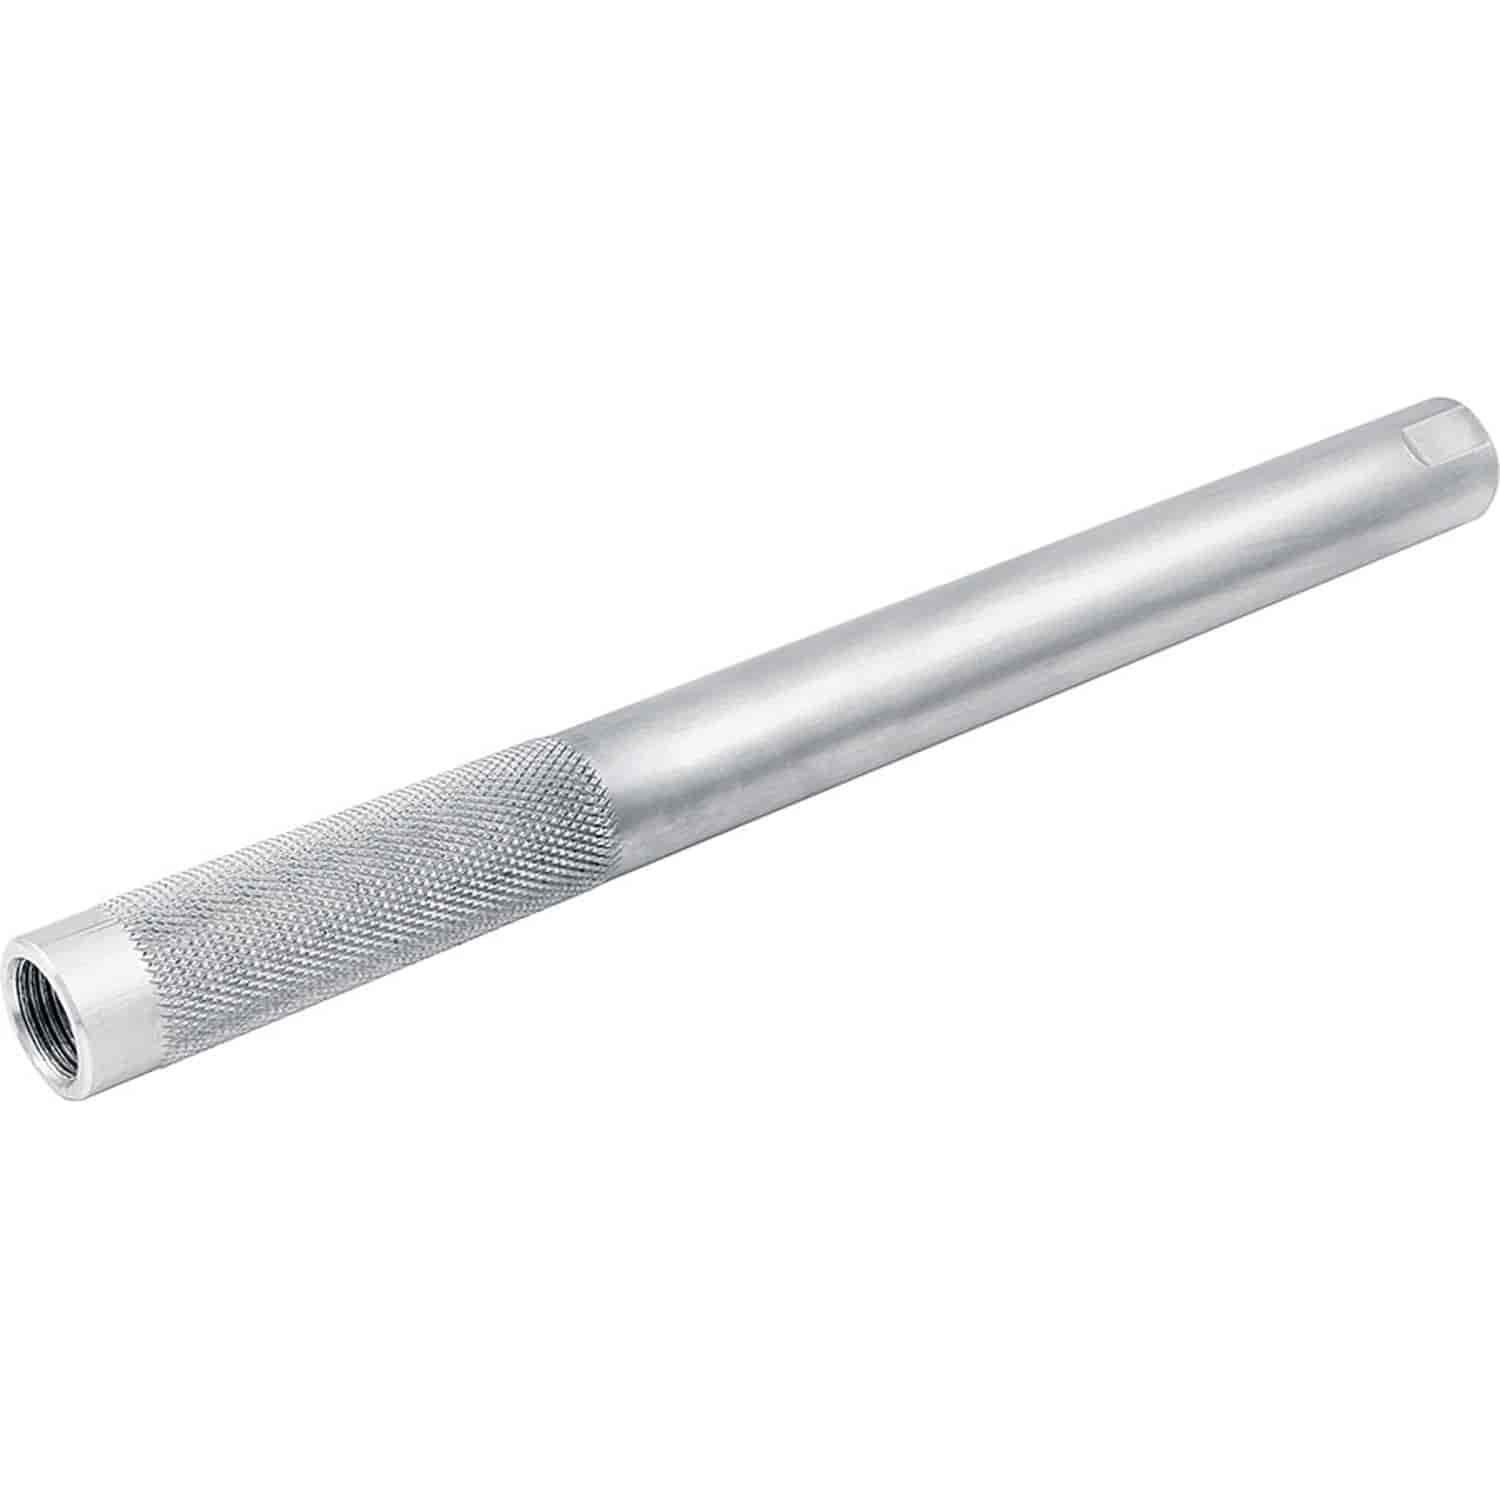 Swedged Aluminum Tie Rod Tube Length: 5"